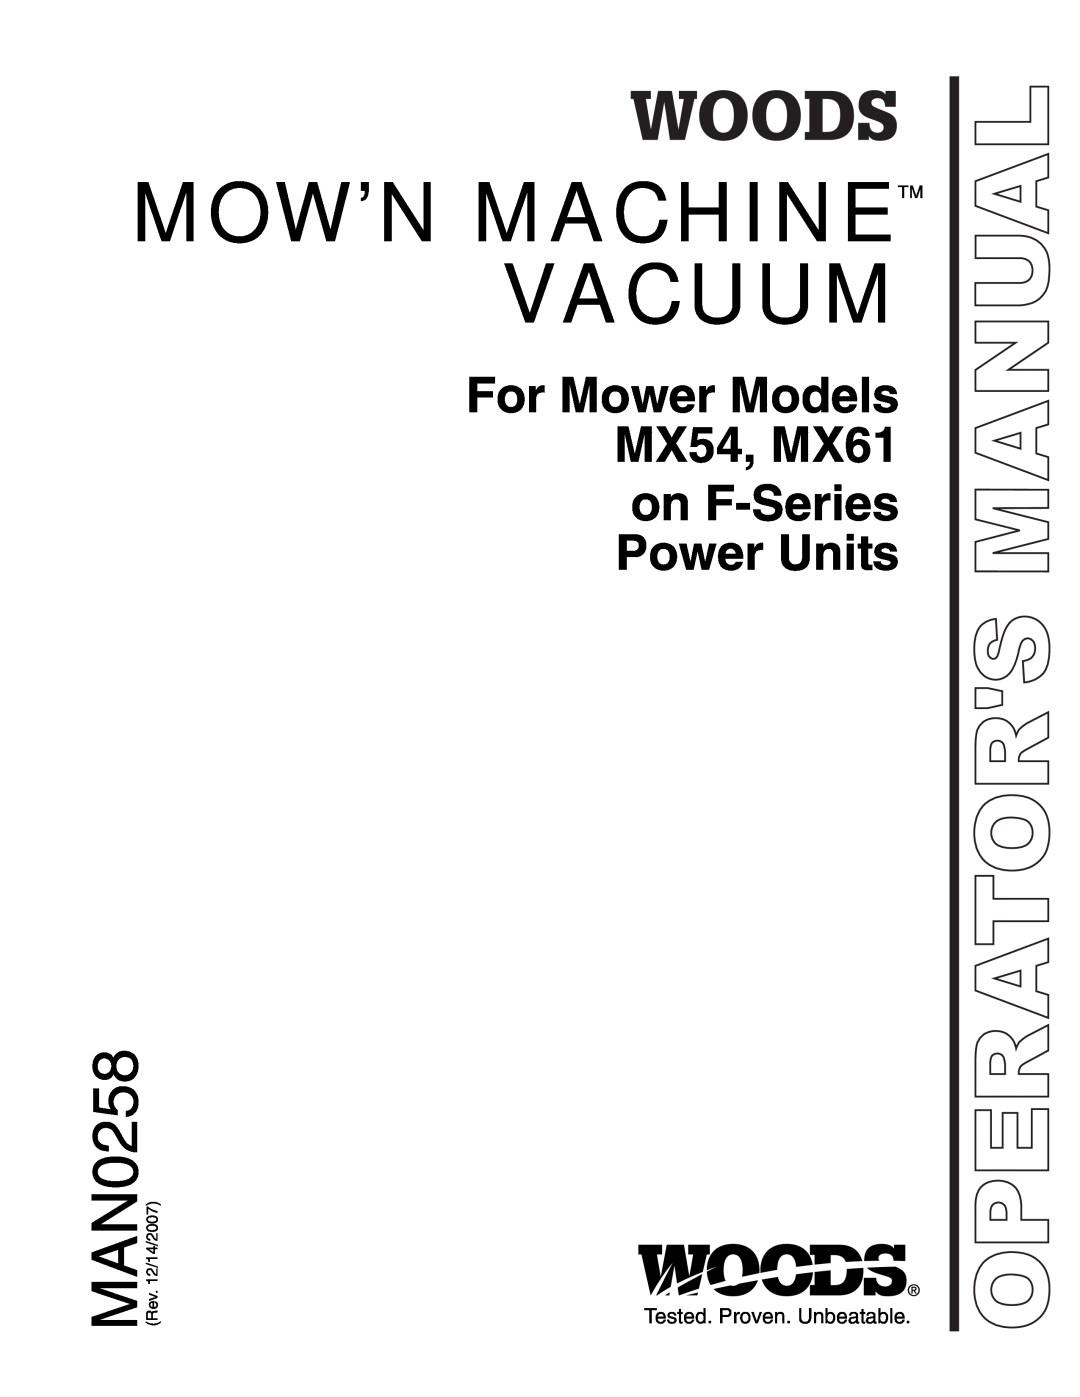 Woods Equipment manual Mow’N Machinetm Vacuum, MAN0258, For Mower Models MX54, MX61 on F-Series, Power Units 